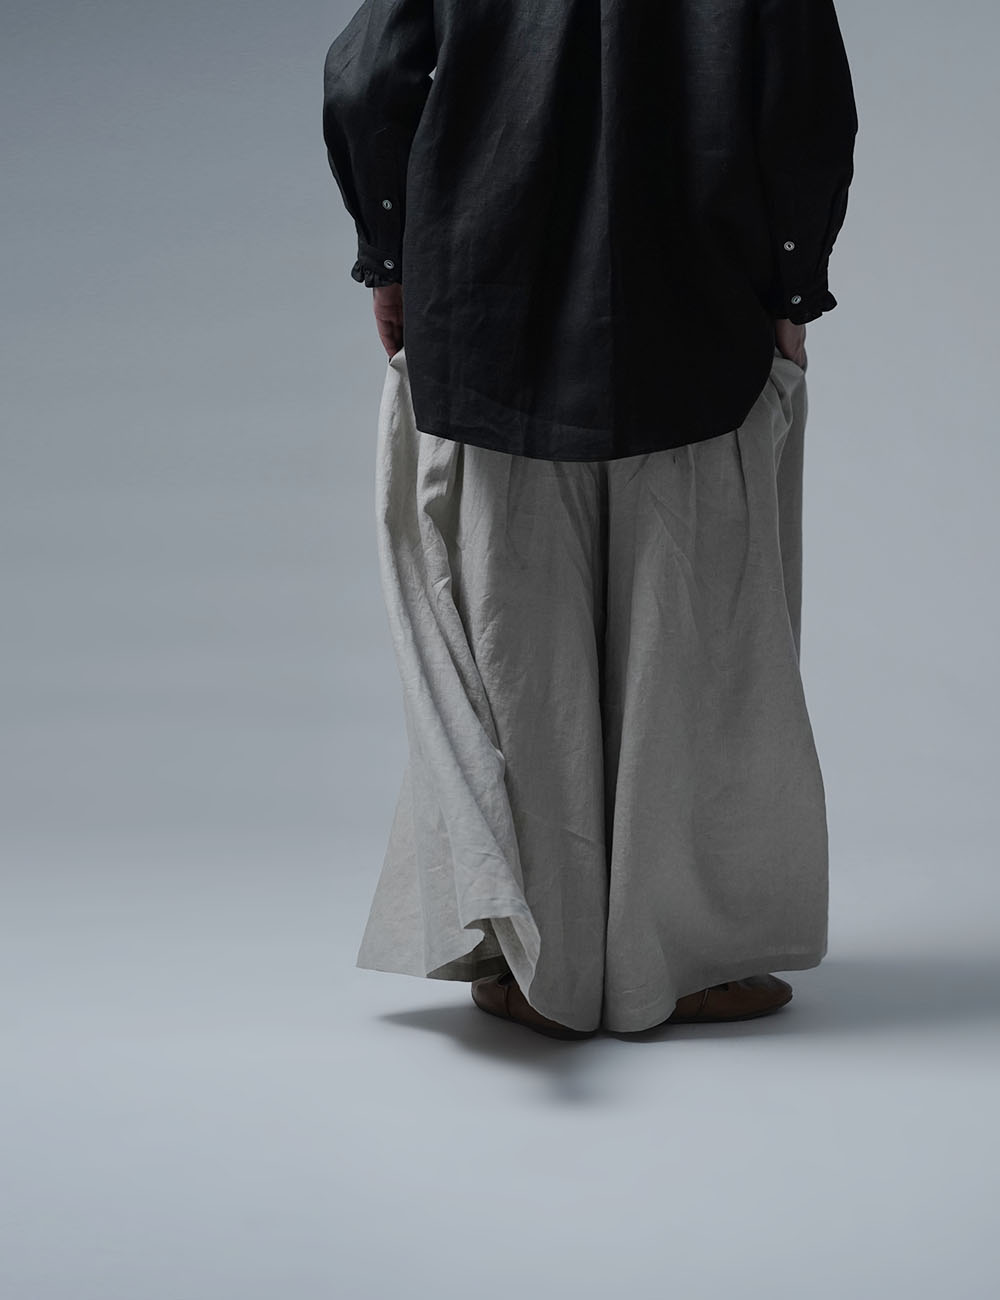 【wafu】Linen Pants 袴(はかま)パンツ/亜麻ナチュラル b002k-amn1